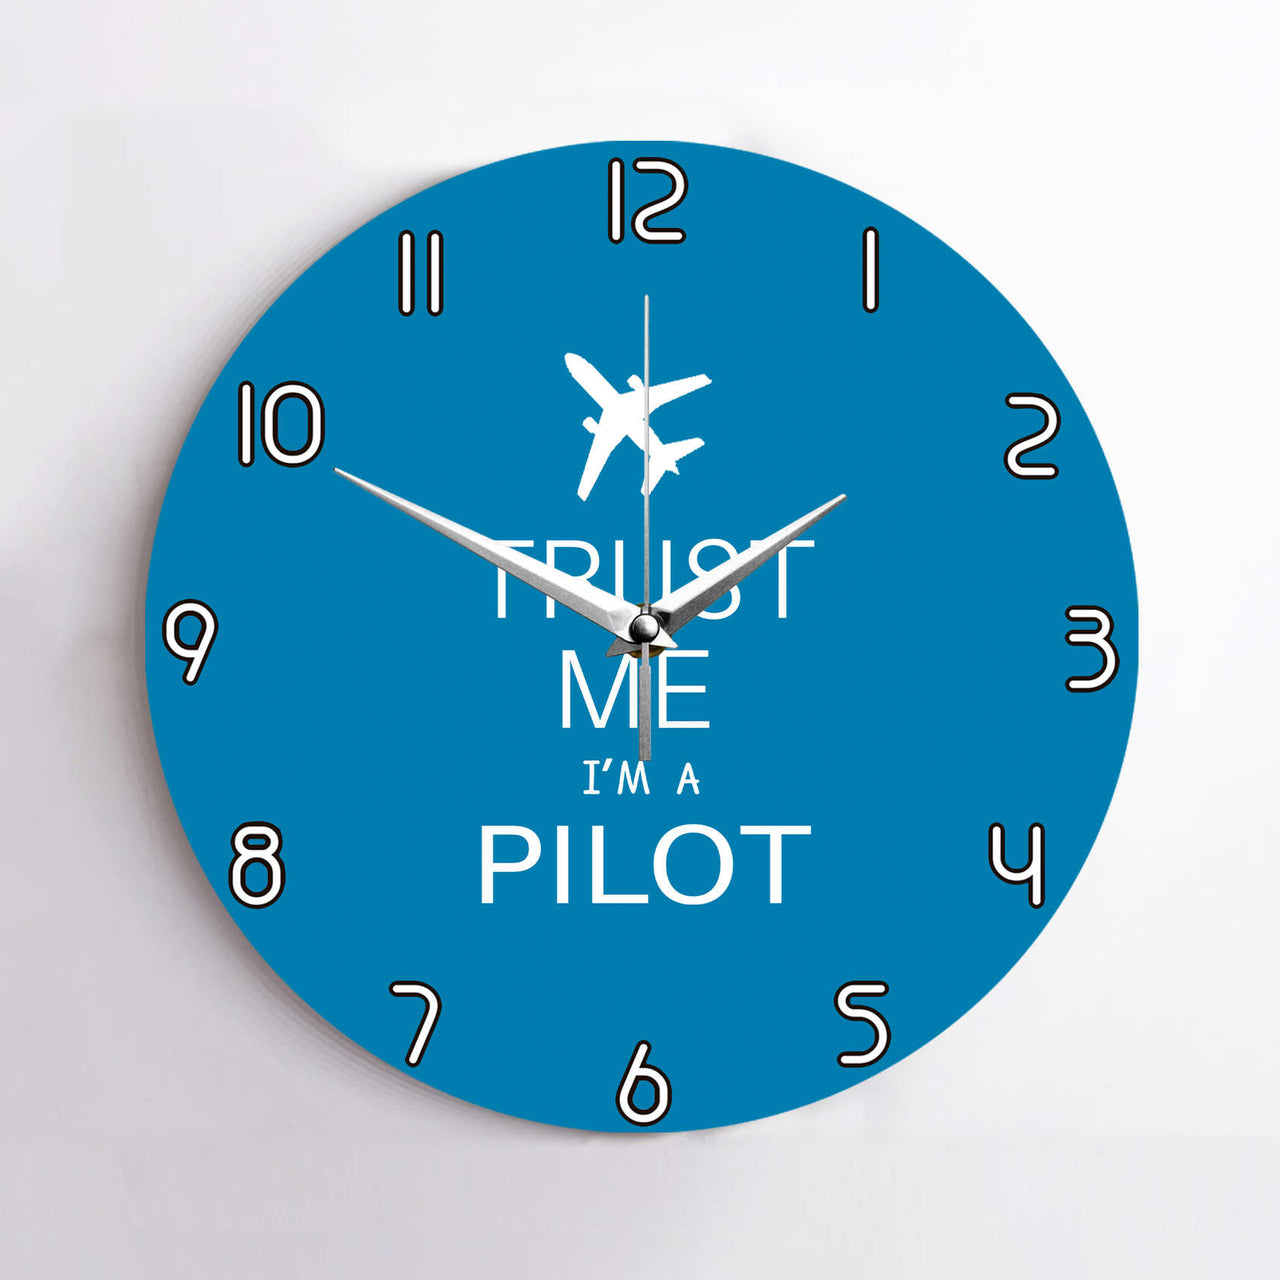 Trust Me I'm a Pilot 2 Designed Wall Clocks